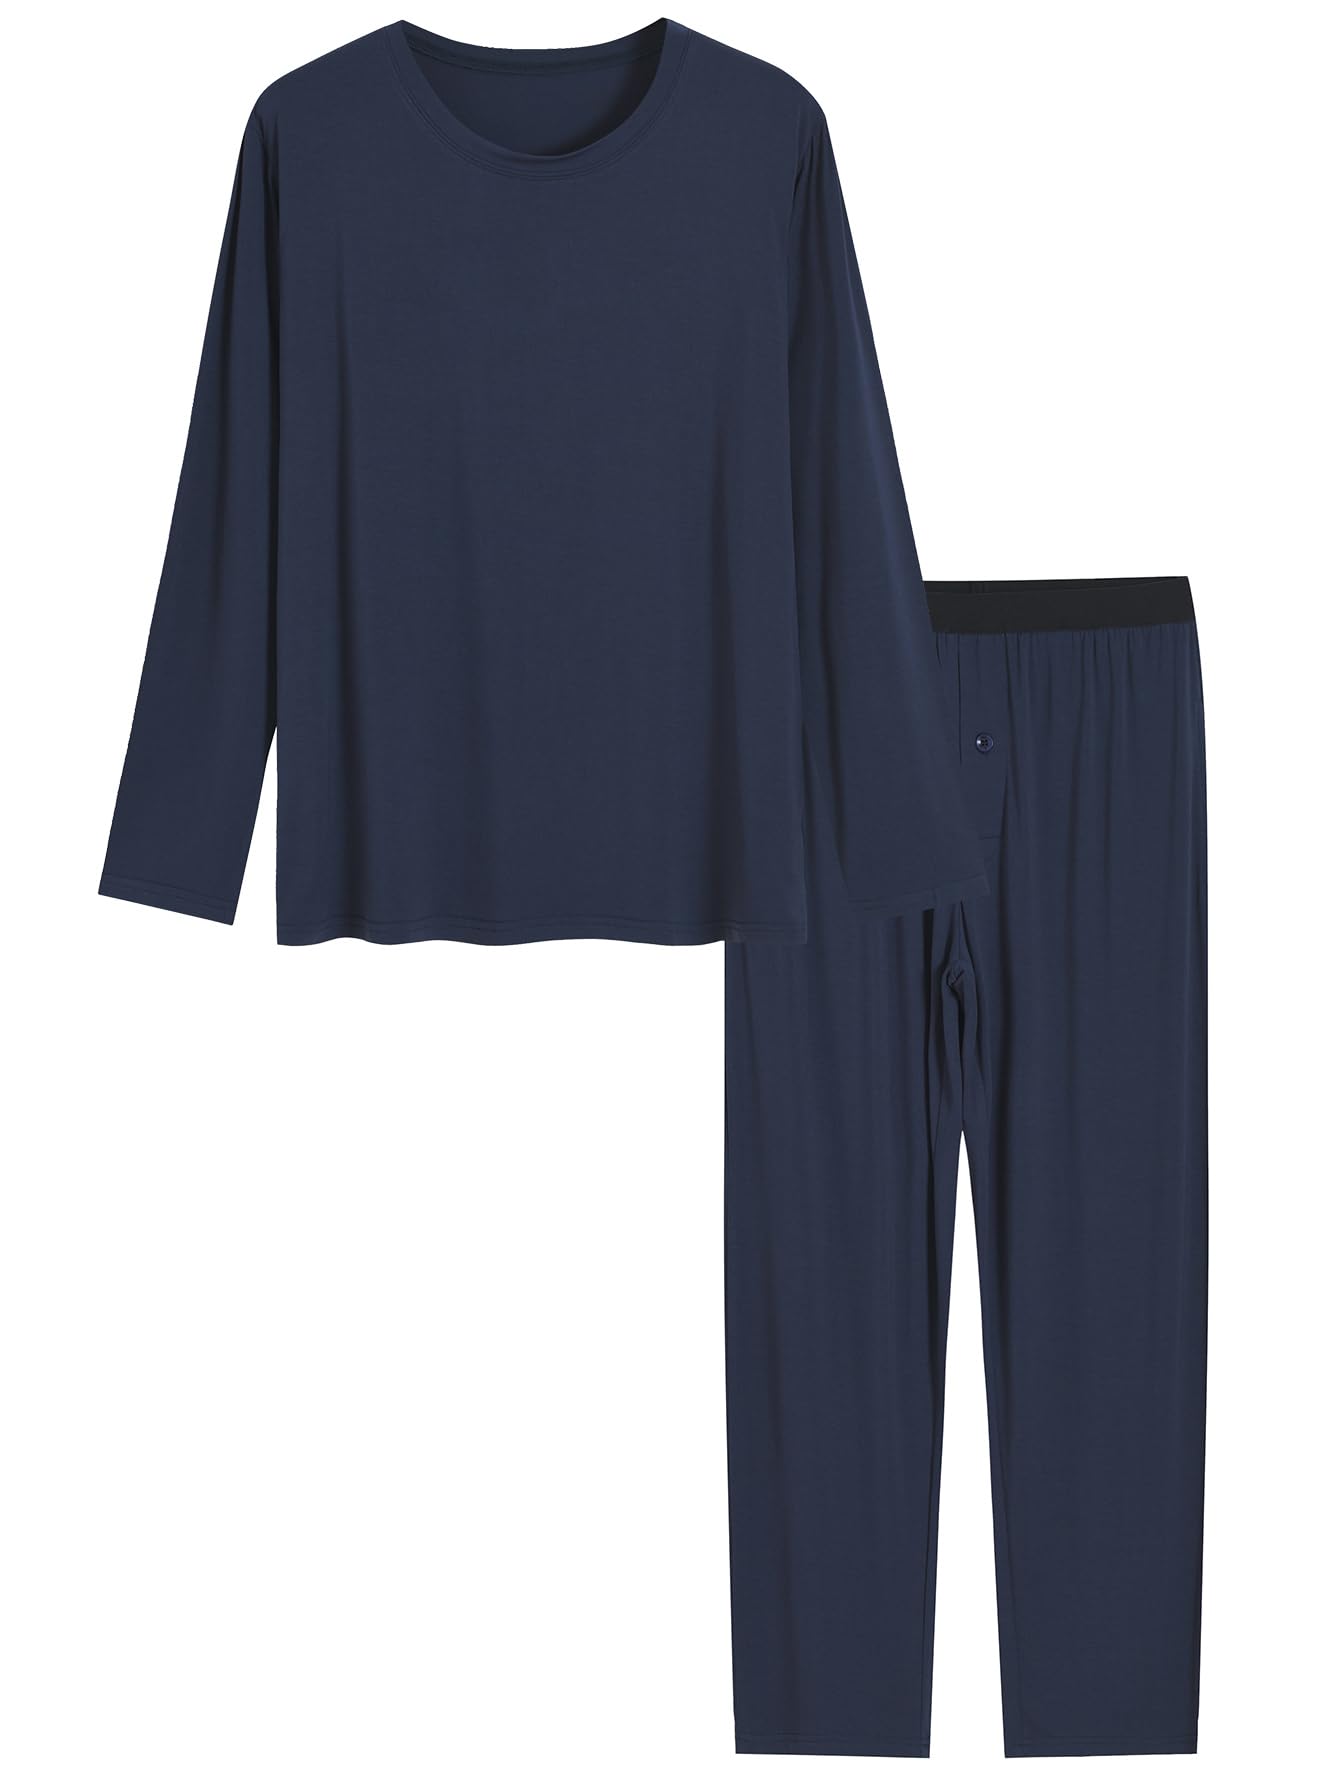 Men's Long Sleeve Pajamas Top and Pants Lounge Set with Pockets - Latuza